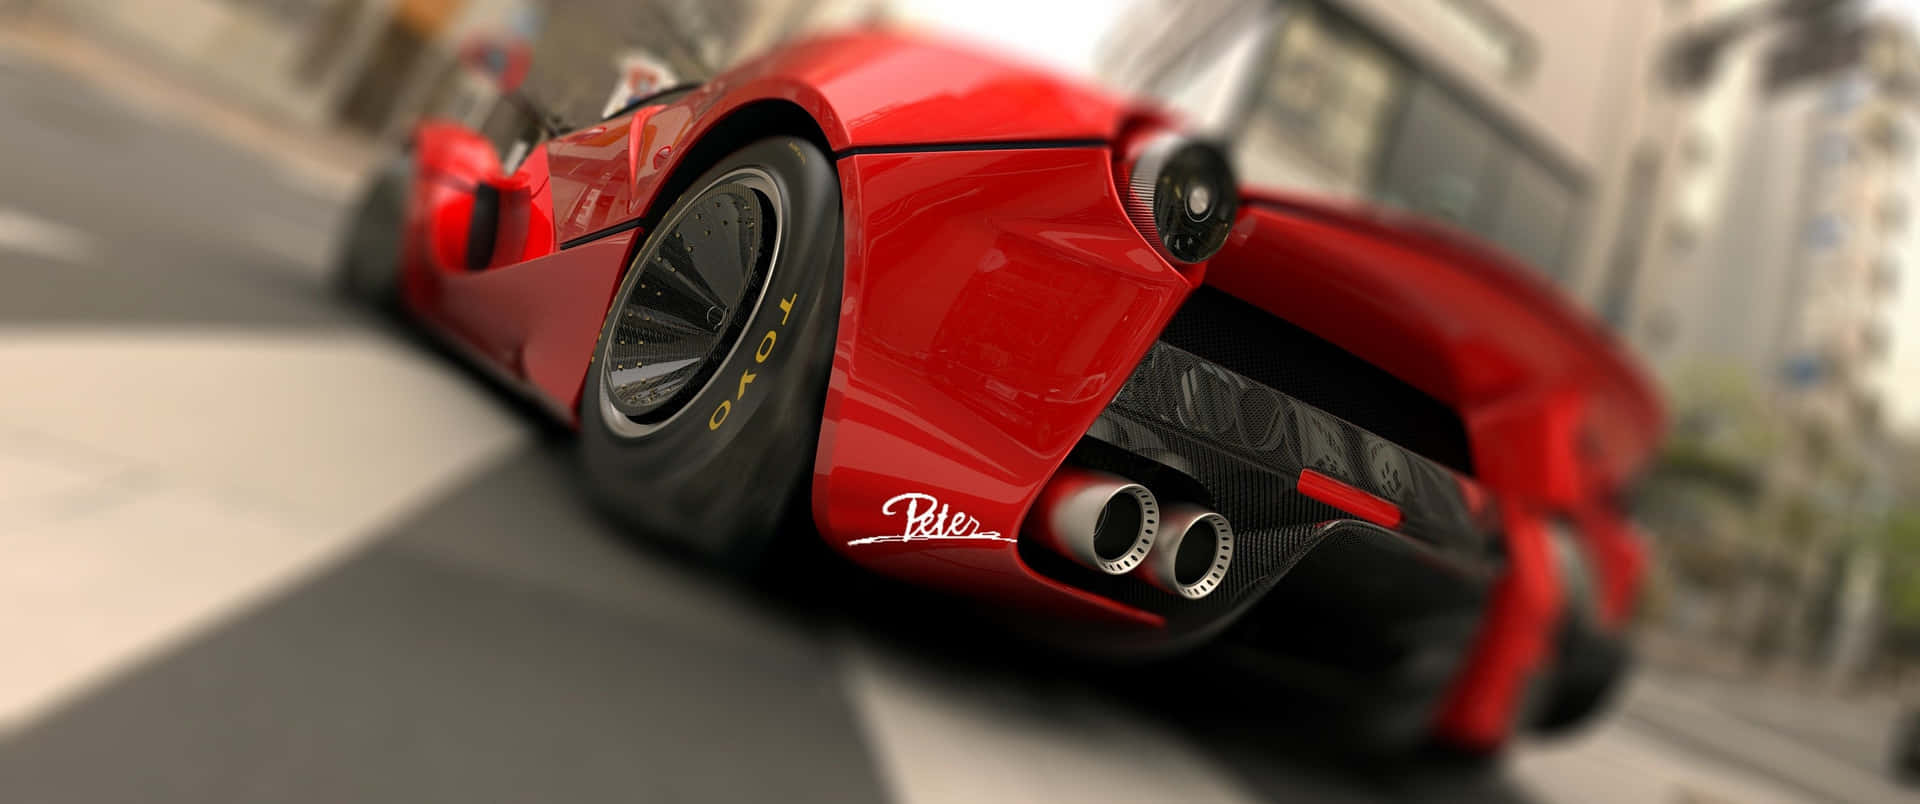 3440x1440p Ferrari Background Peter Background